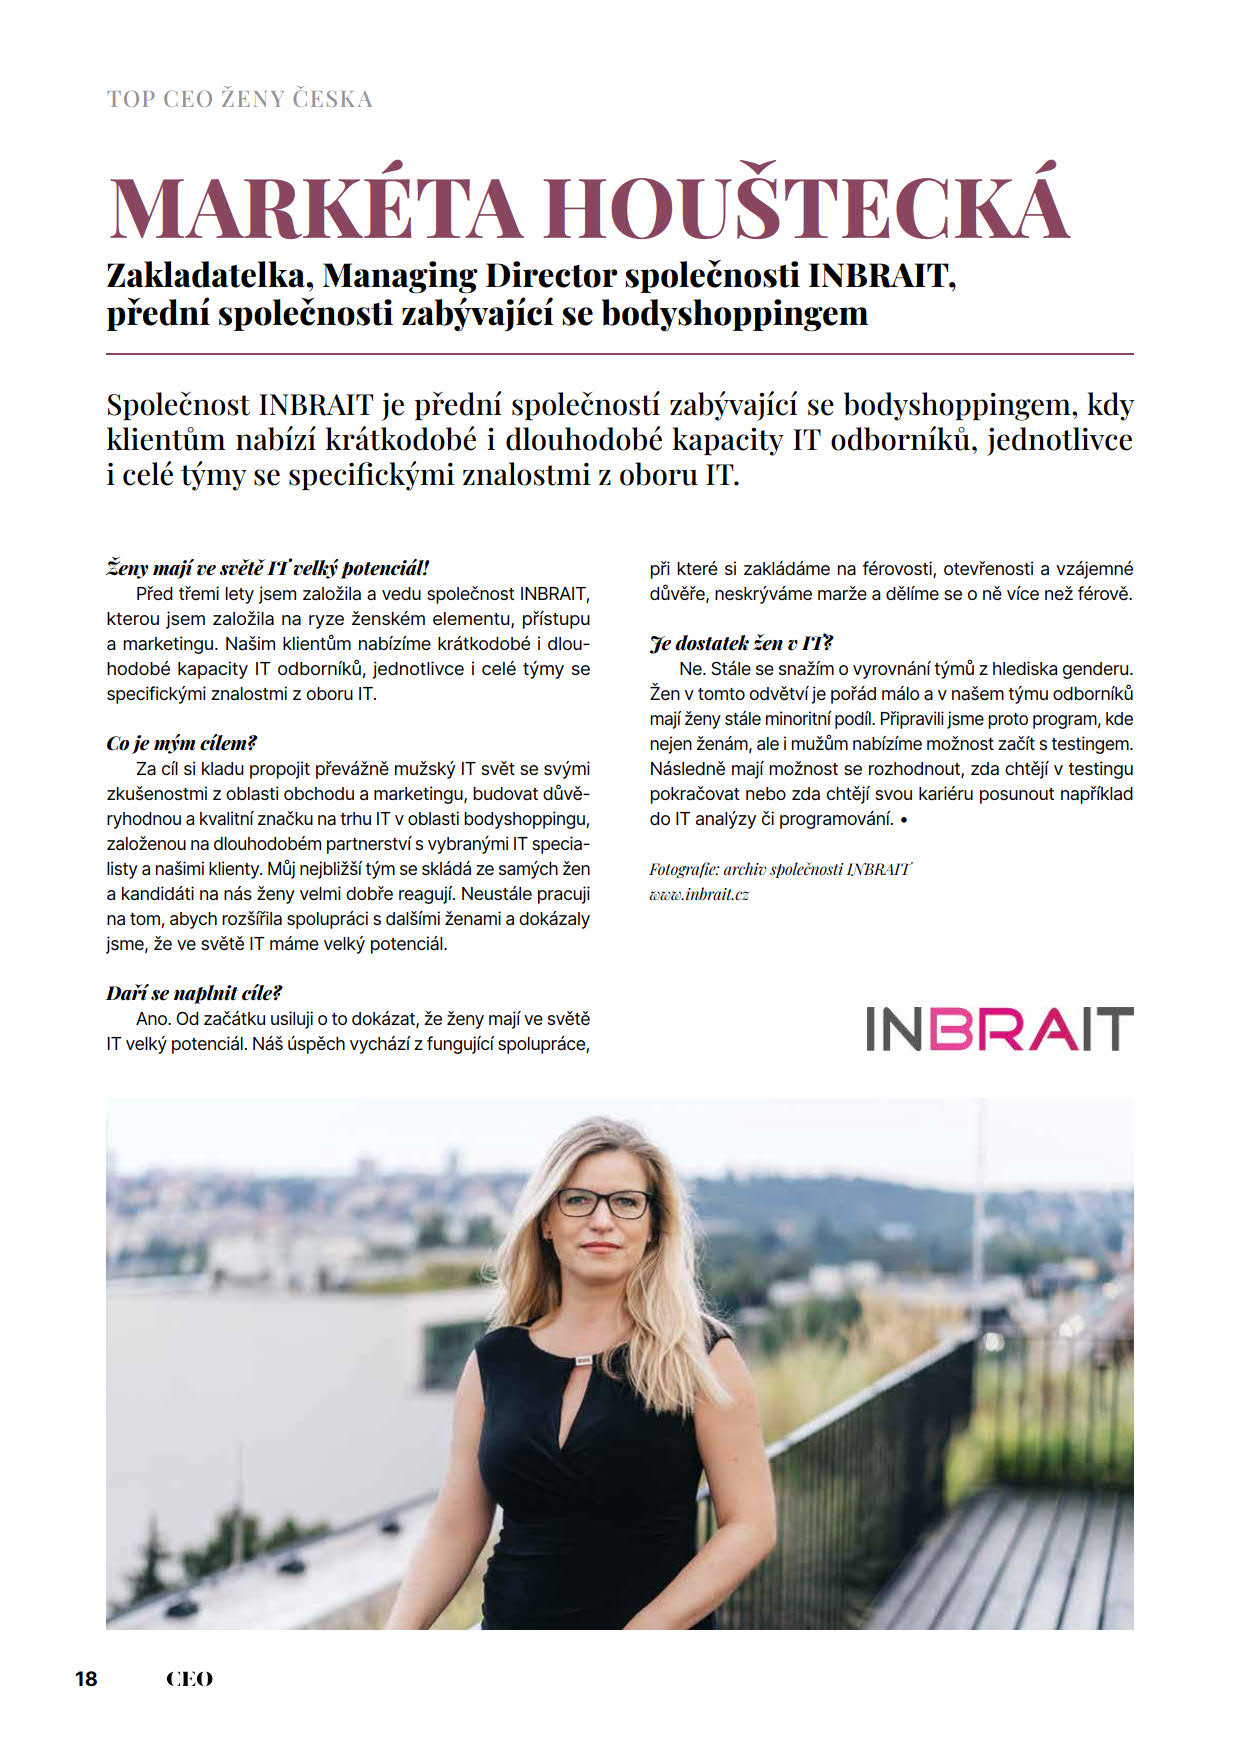 CEO magazím - Top 100 žen_Markéta Houštecká_1